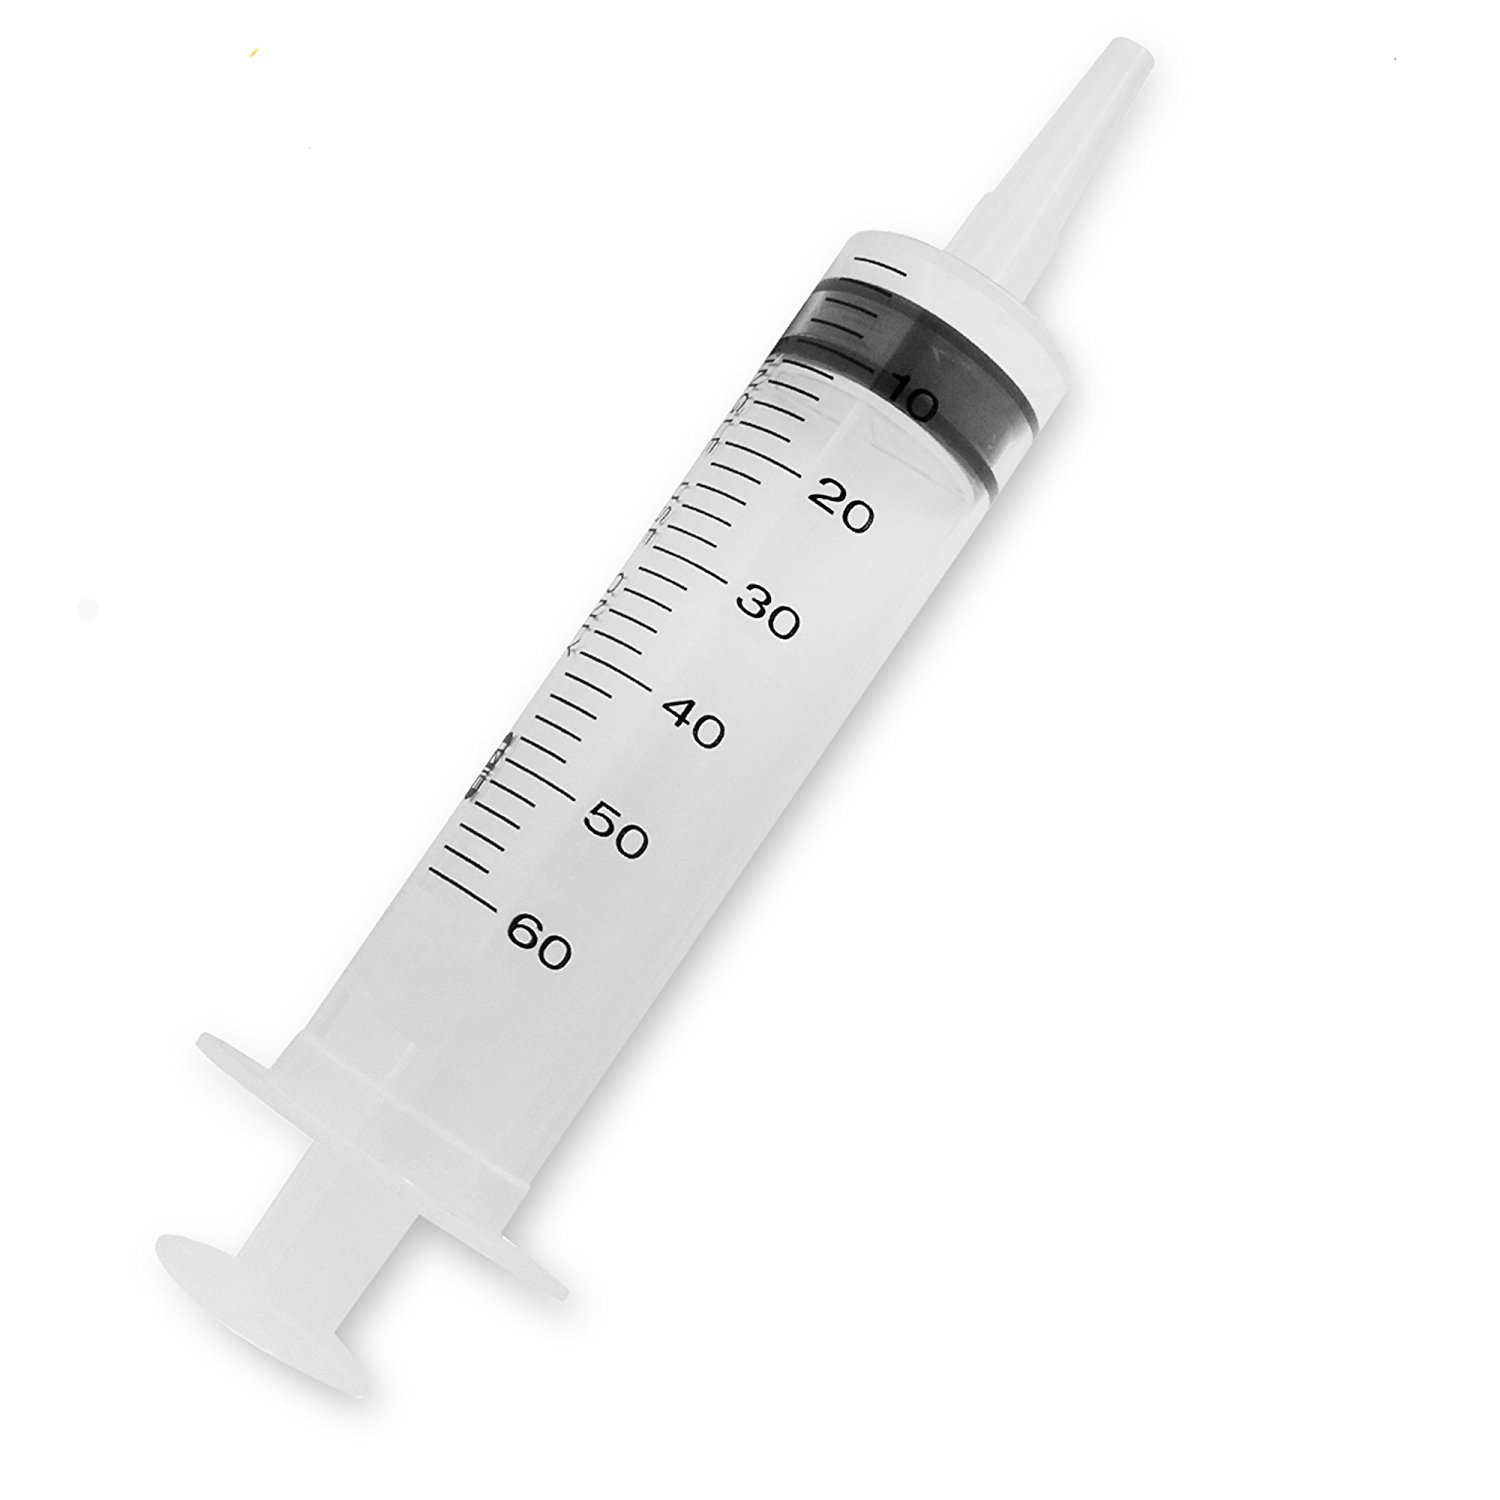 Amazon.com: EXELint 60 ml Disposable Syringe, Sterile Single Pack ...